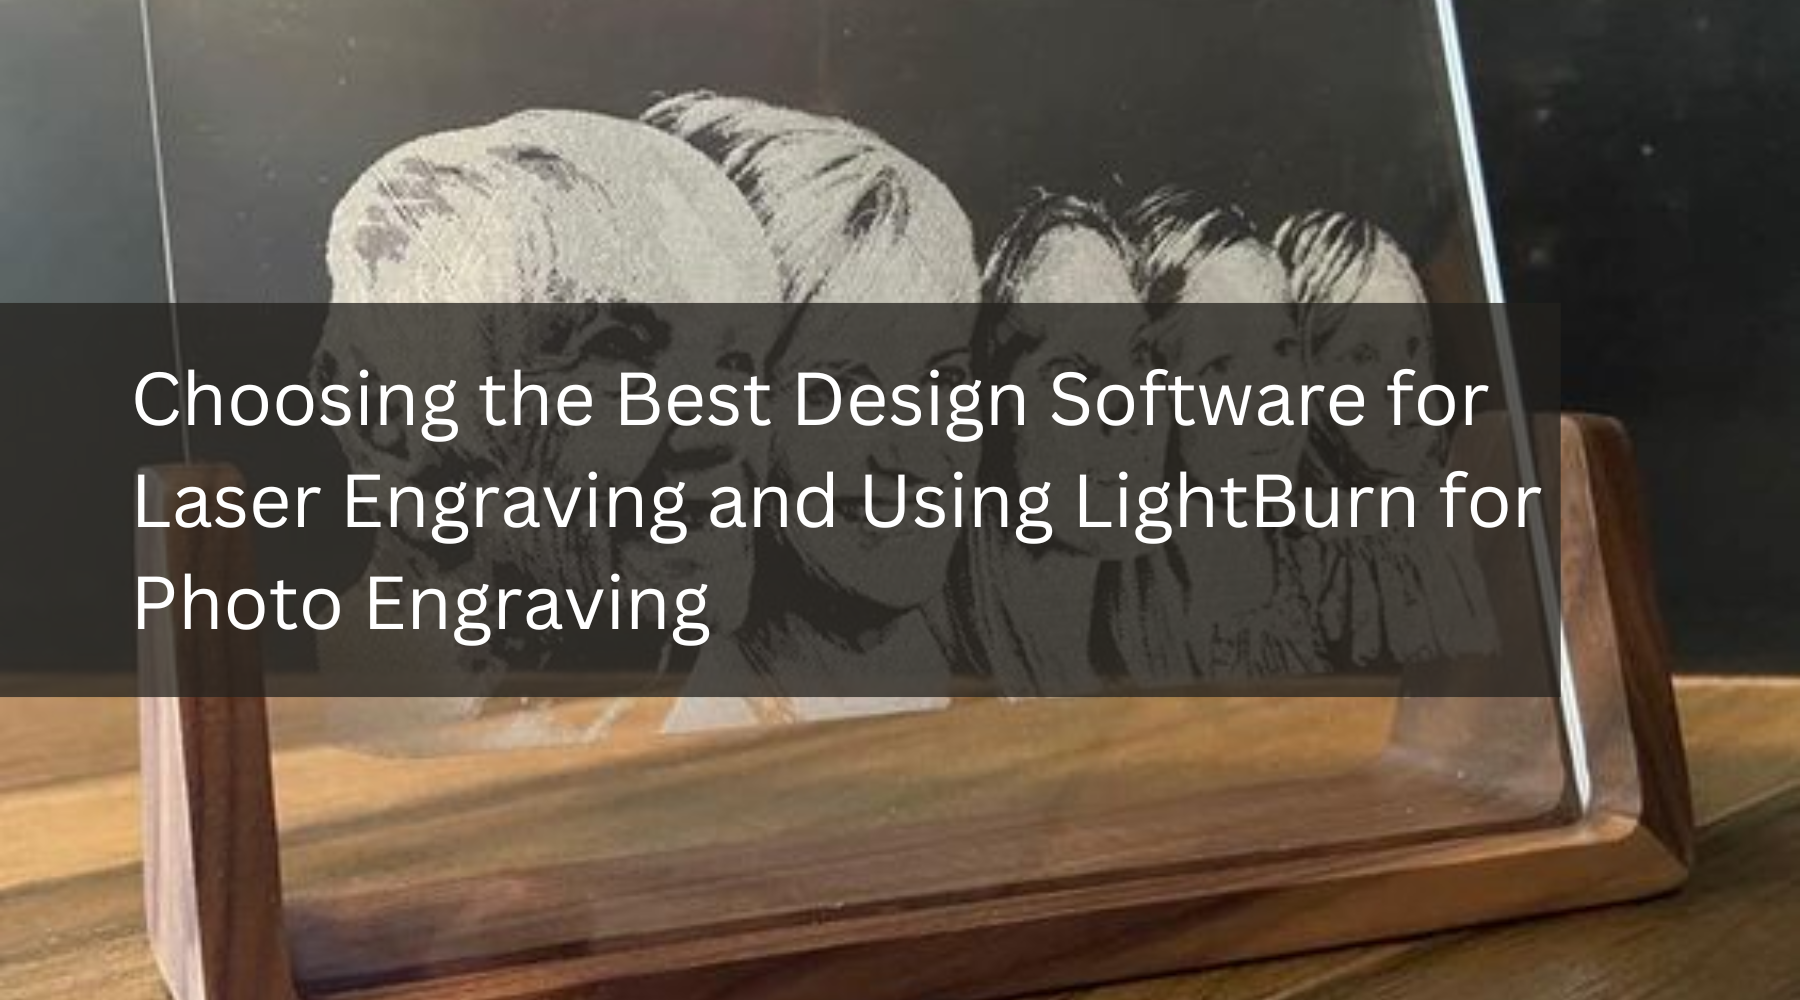 Choosing the Best Design Software for Laser Engraving and Using LightBurn for Photo Engraving